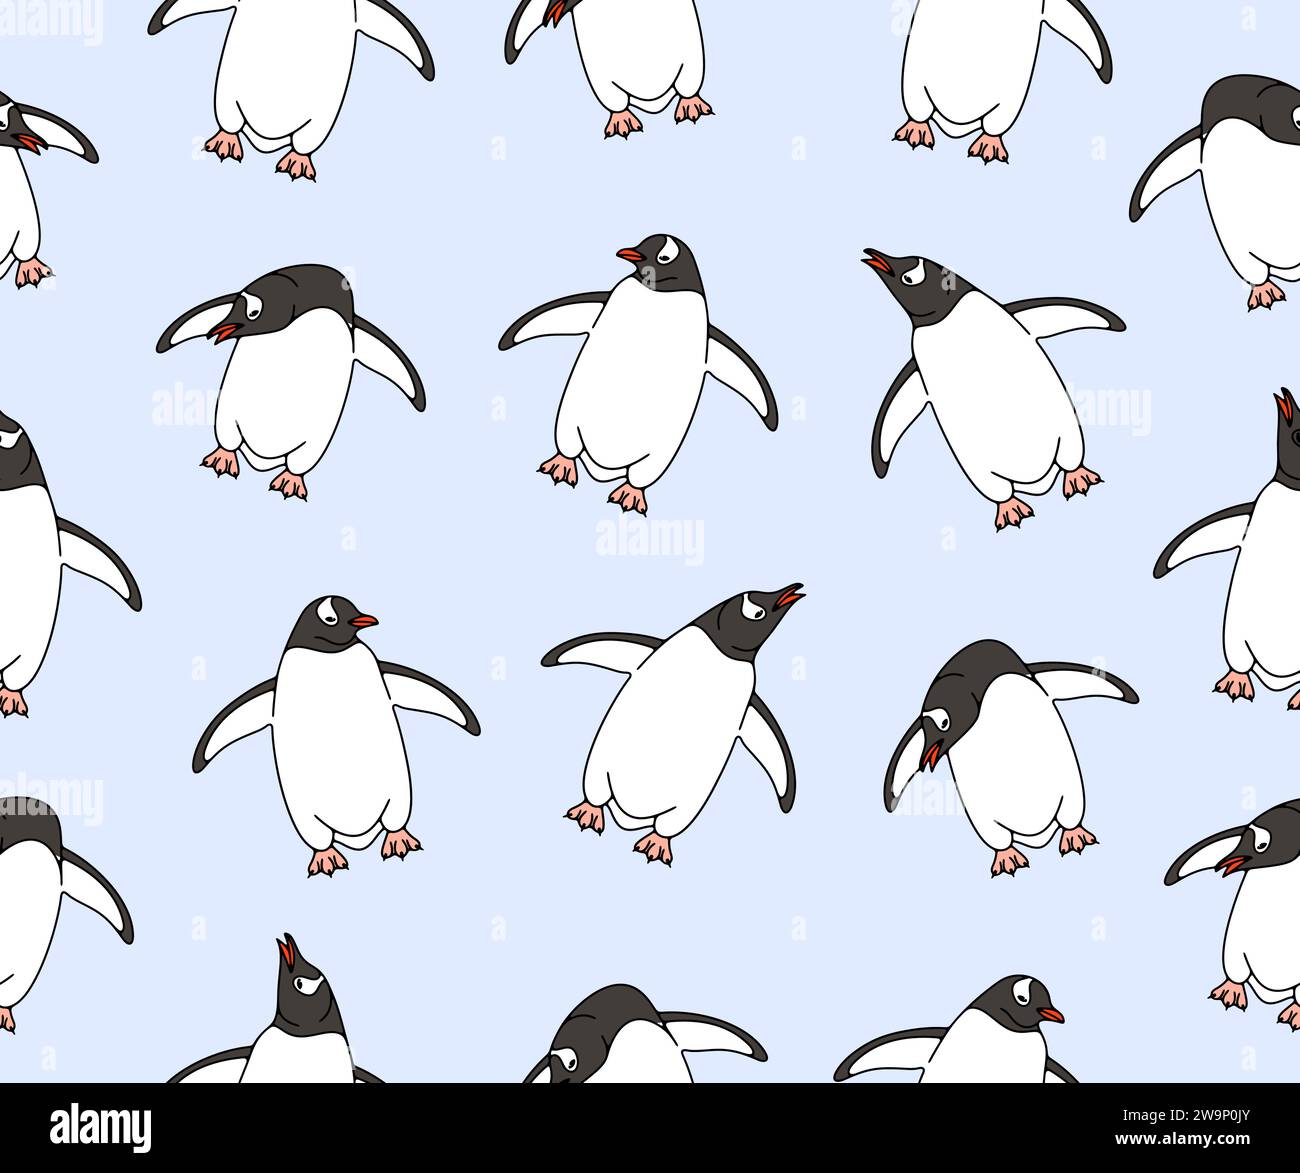 Subantarctic penguin or gentoo penguins, seamless vector background and pattern. Animal, bird, avian, feathered, antarctica and nature, vector design Stock Vector